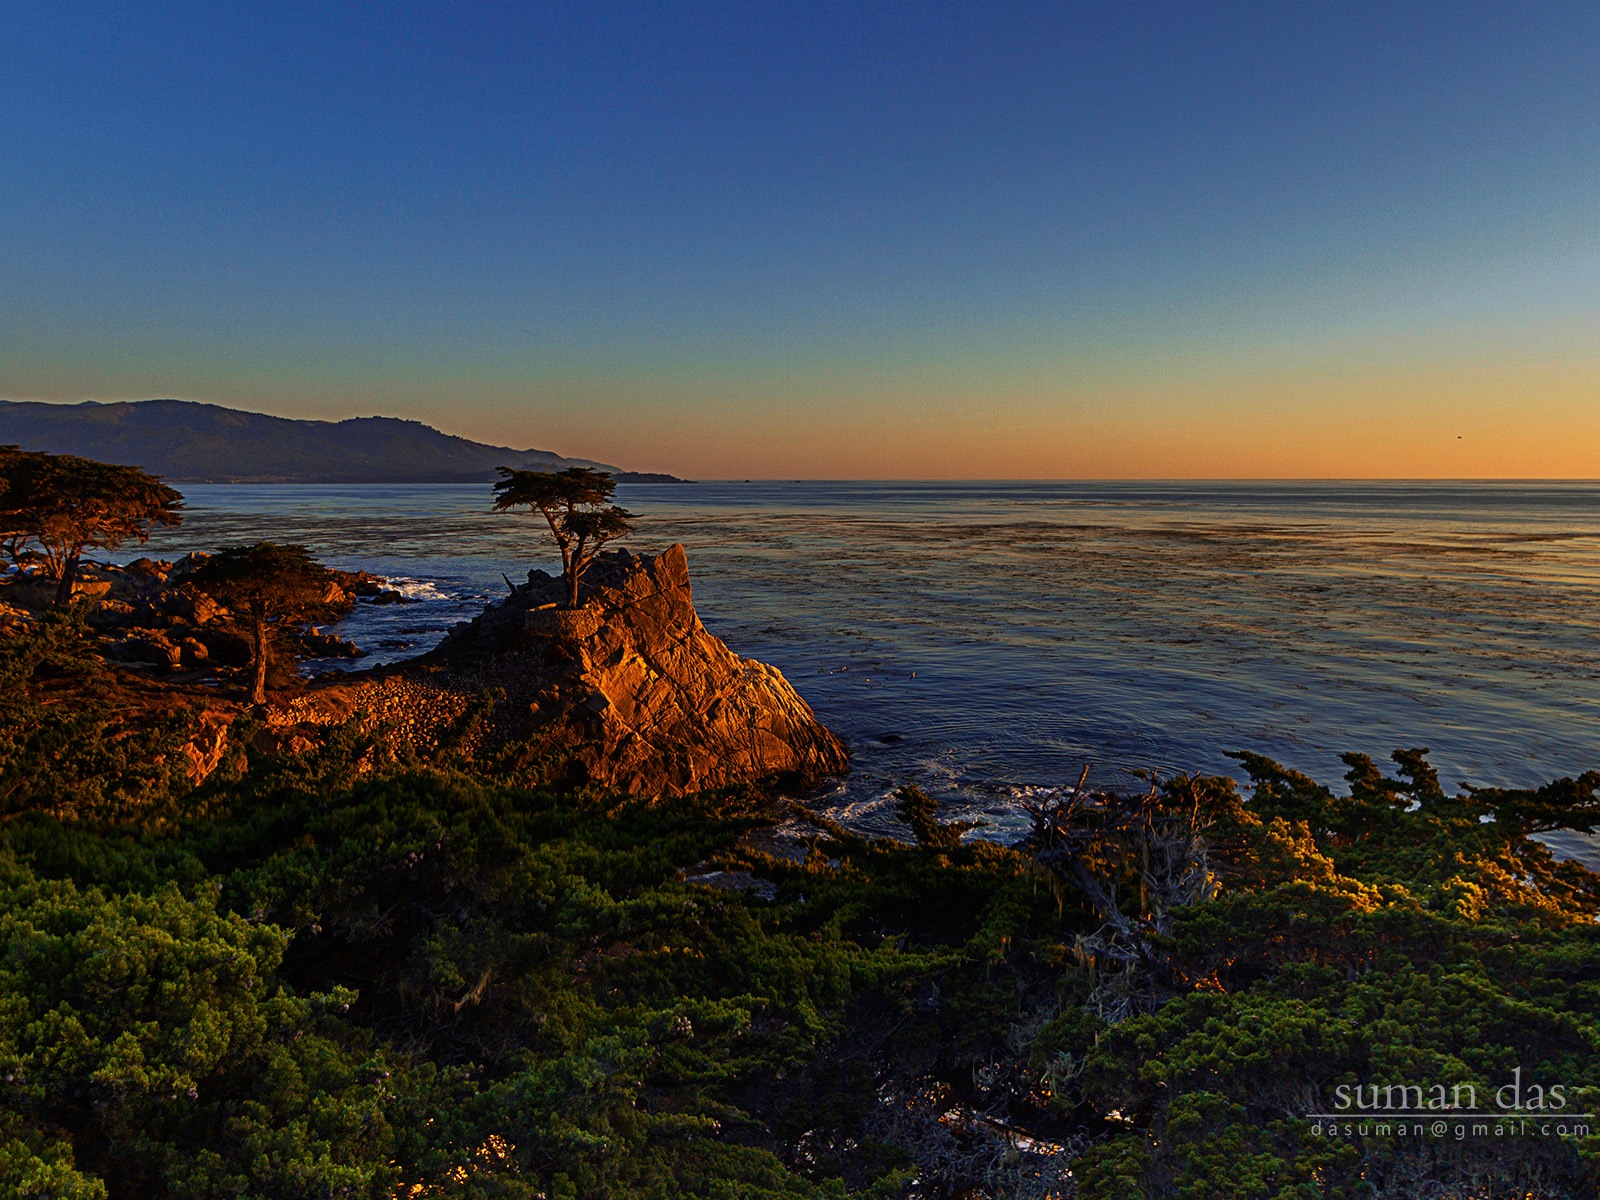 California coastal scenery, Windows 8 theme wallpapers #3 - 1600x1200